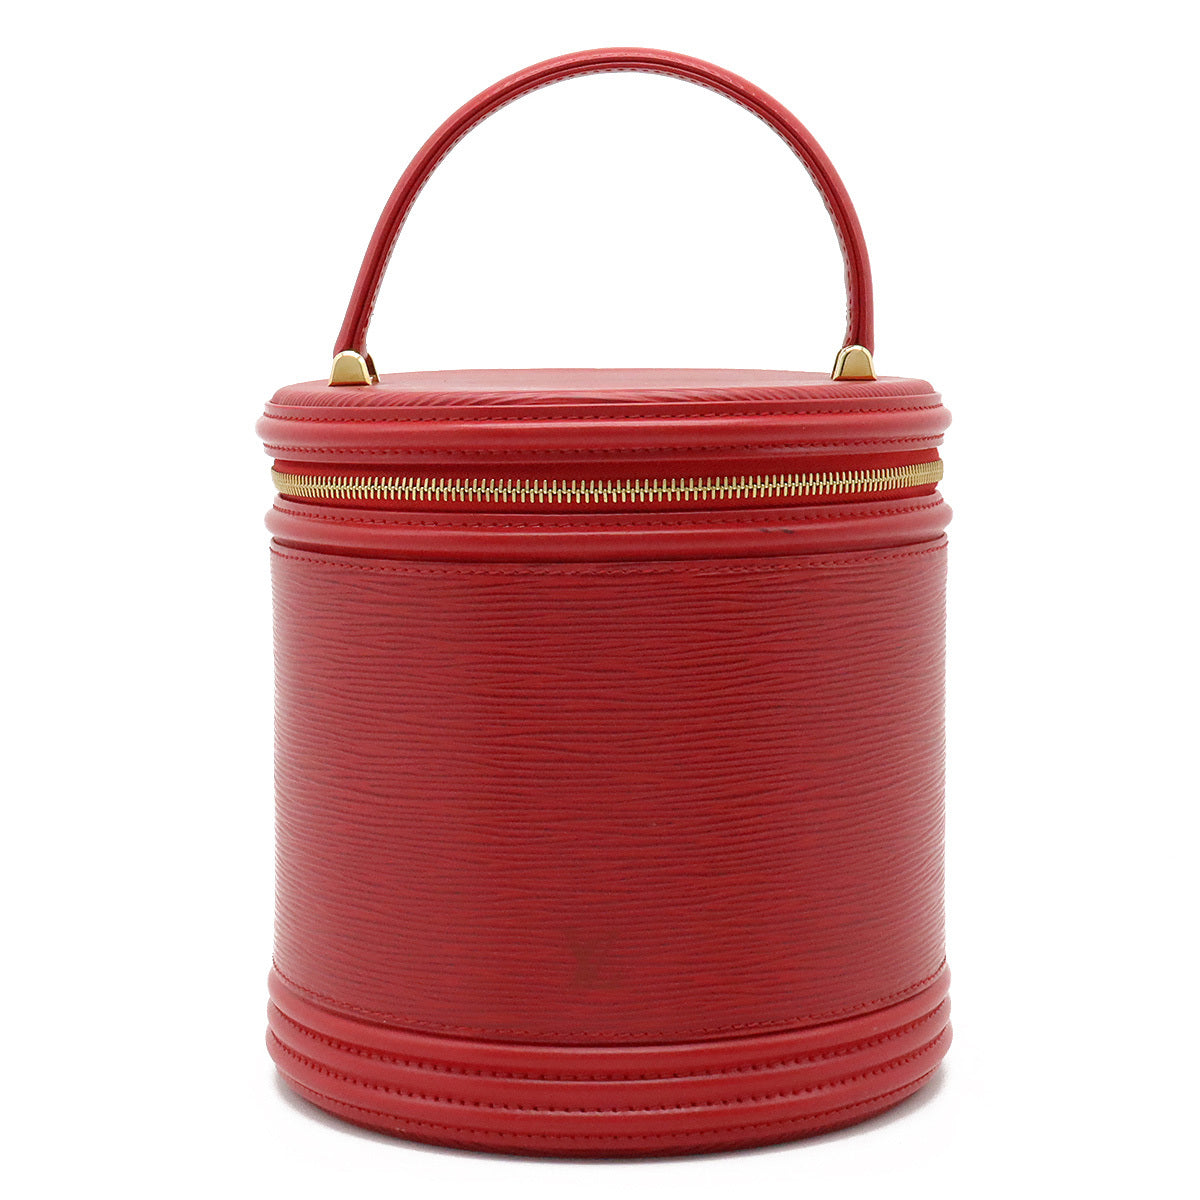 Louis Vuitton Louis Vuitton Cannes Red Epi Leather Vanity Hand Bag